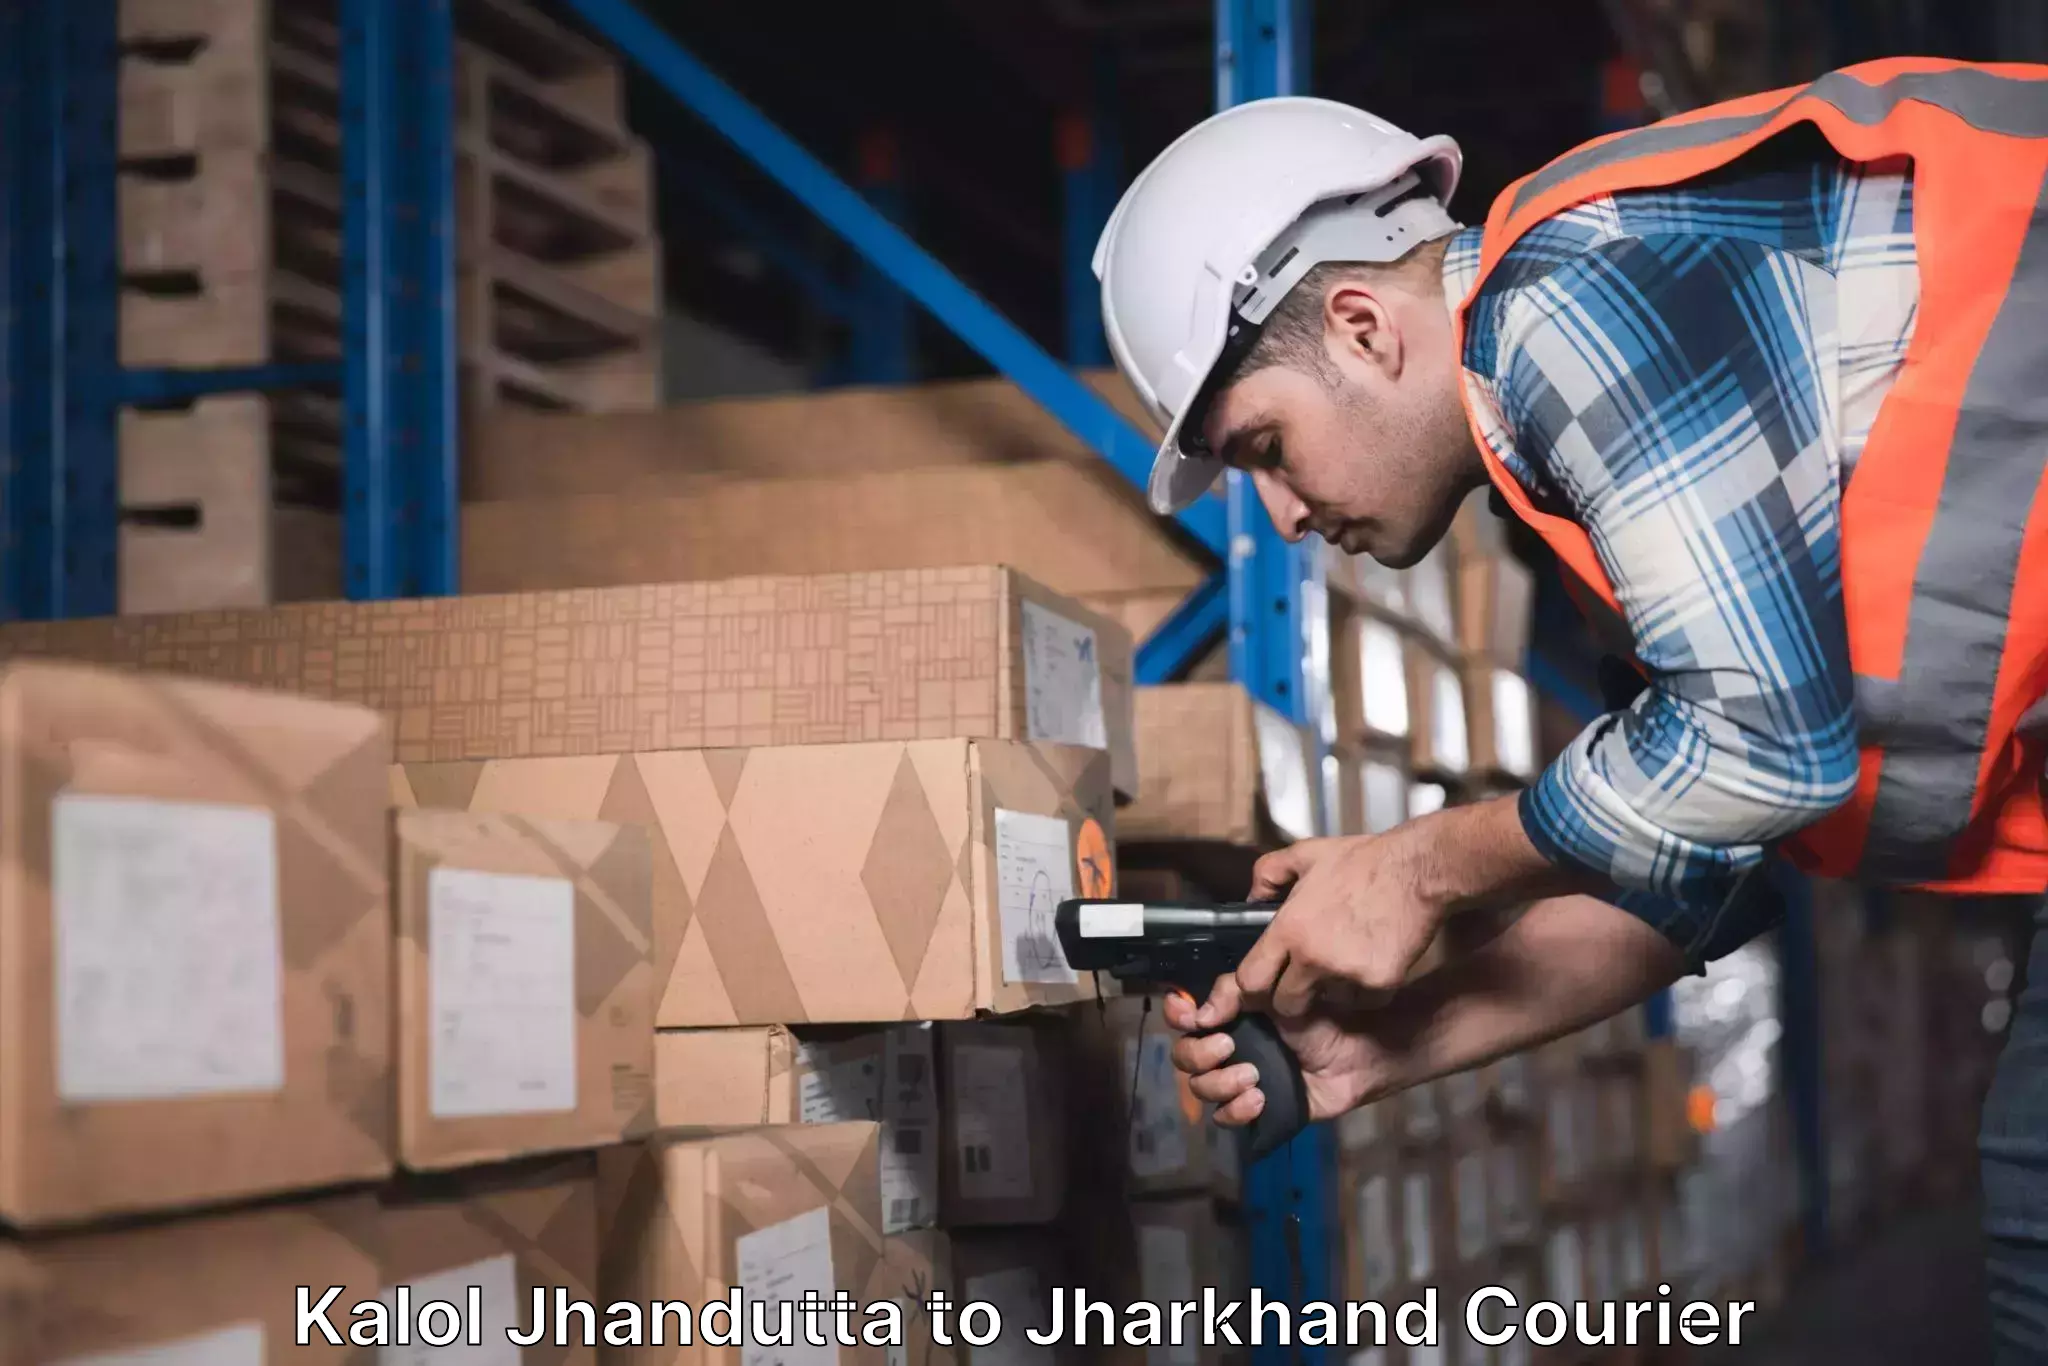 Trackable shipping service Kalol Jhandutta to Peterbar